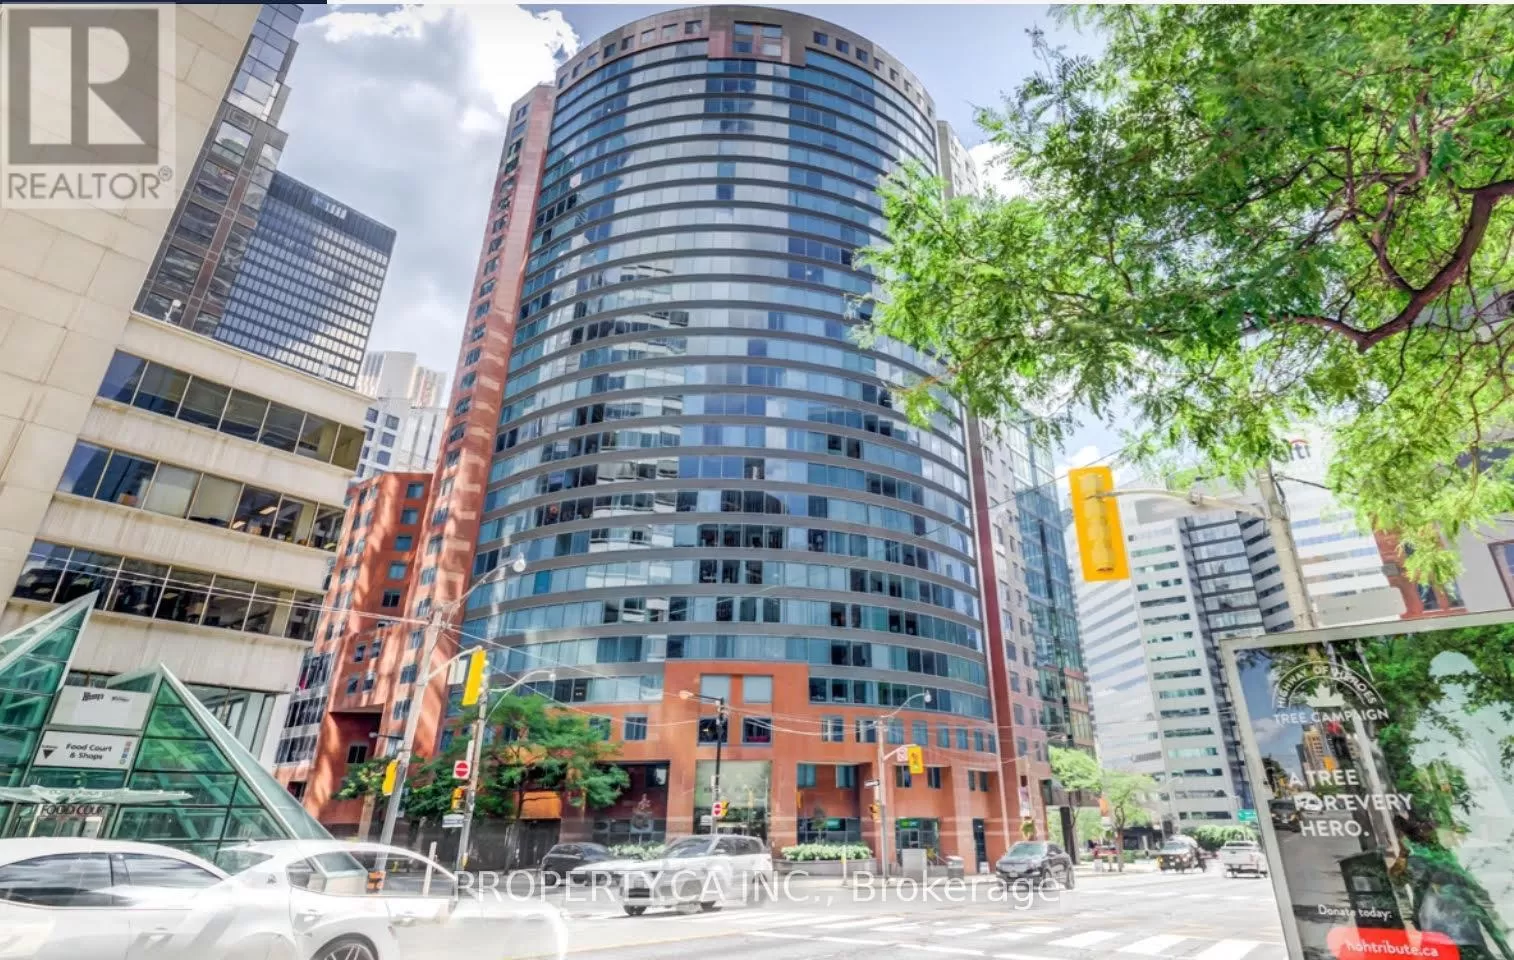 Apartment for rent: 1109 - 33 University Avenue, Toronto, Ontario M5J 2S7